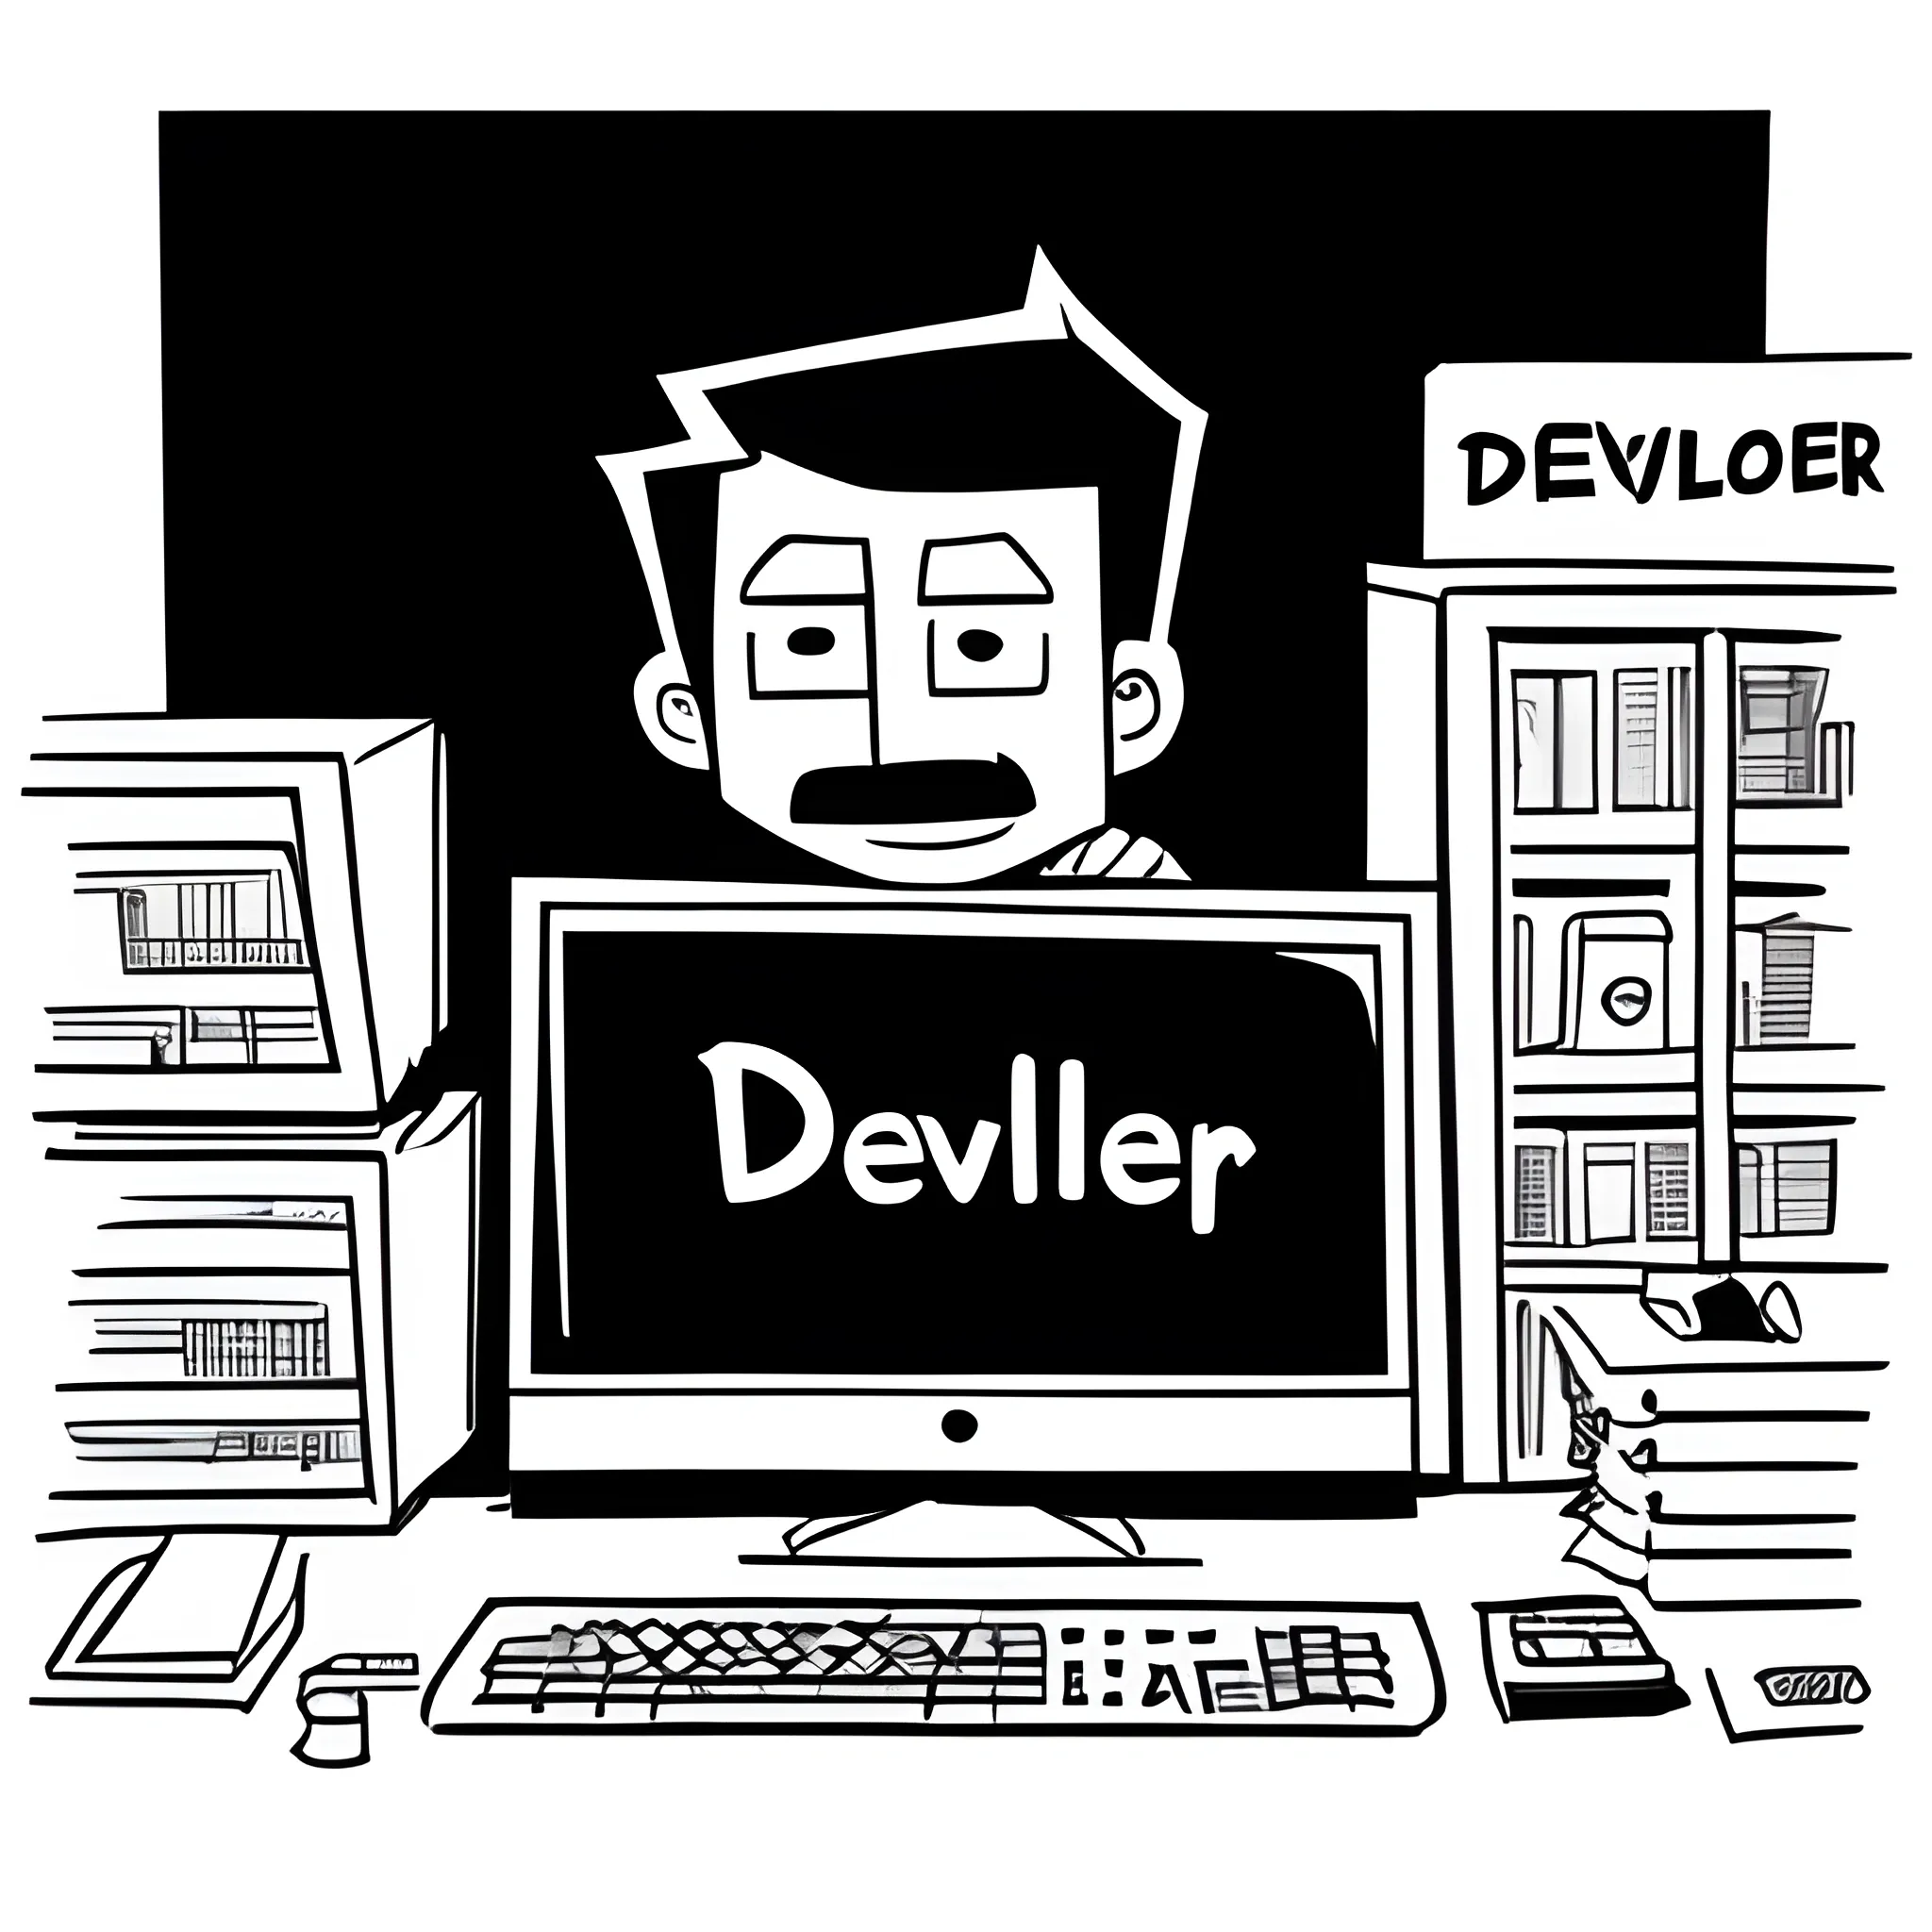 developer
, Cartoon